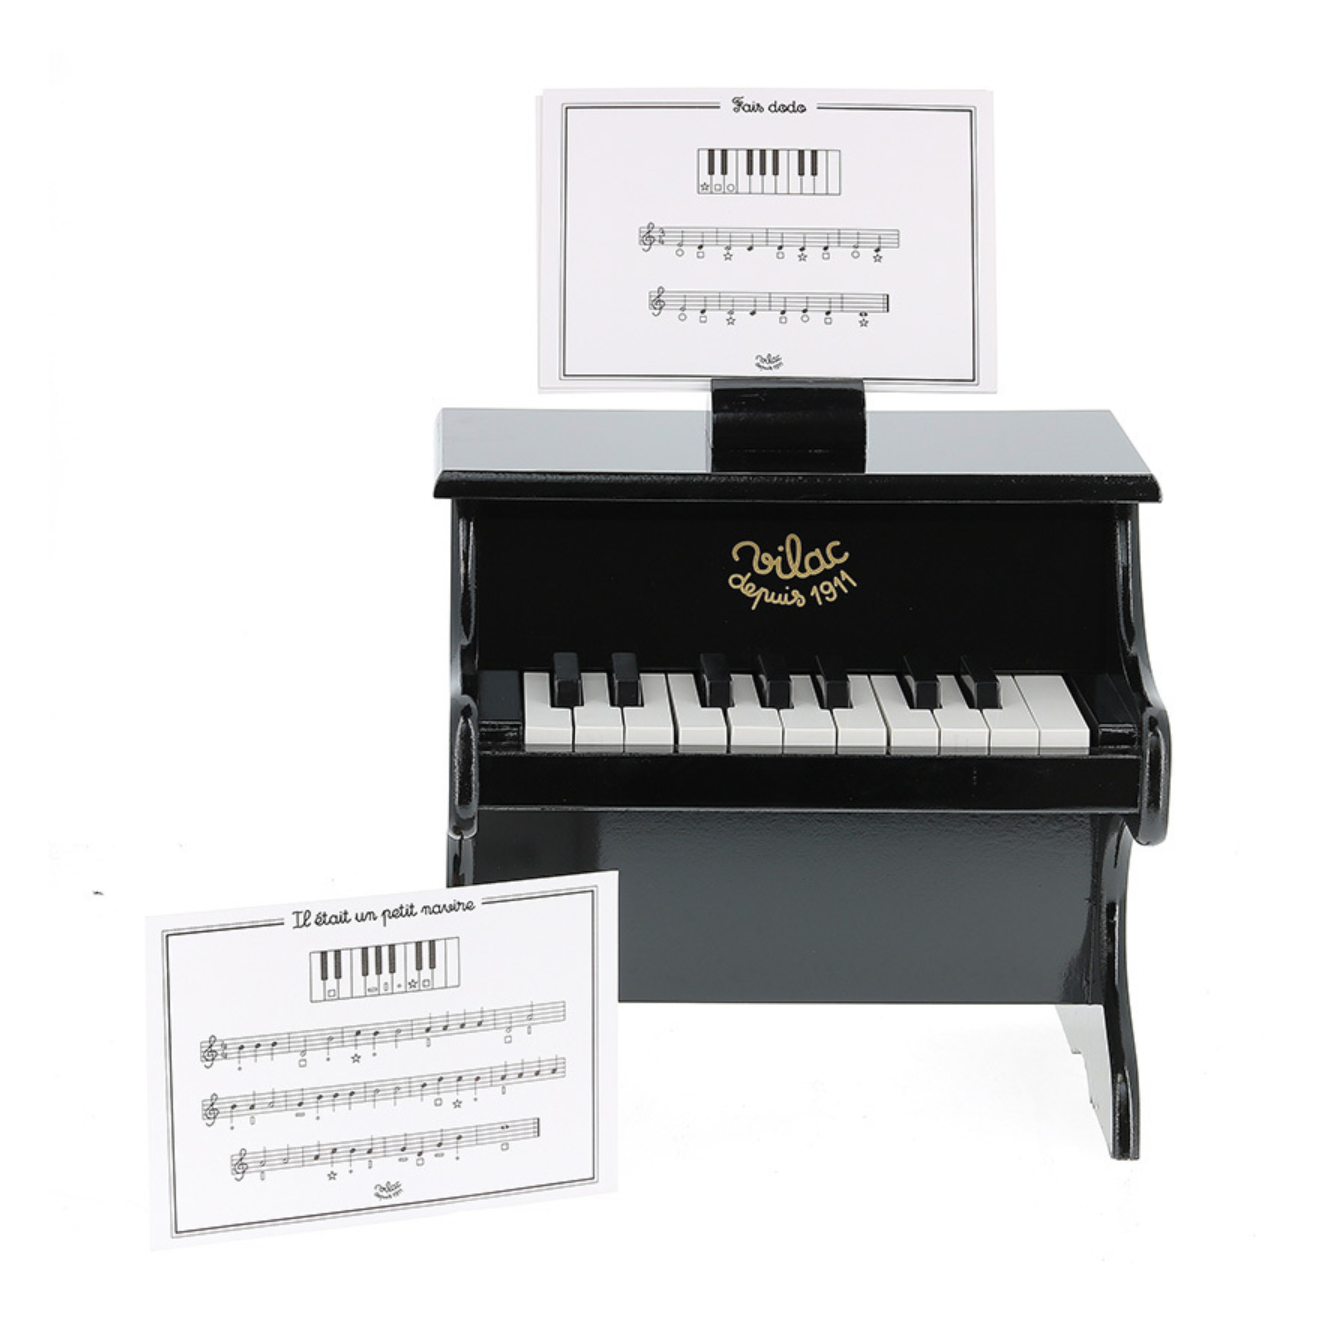 18-key black piano with sheet music